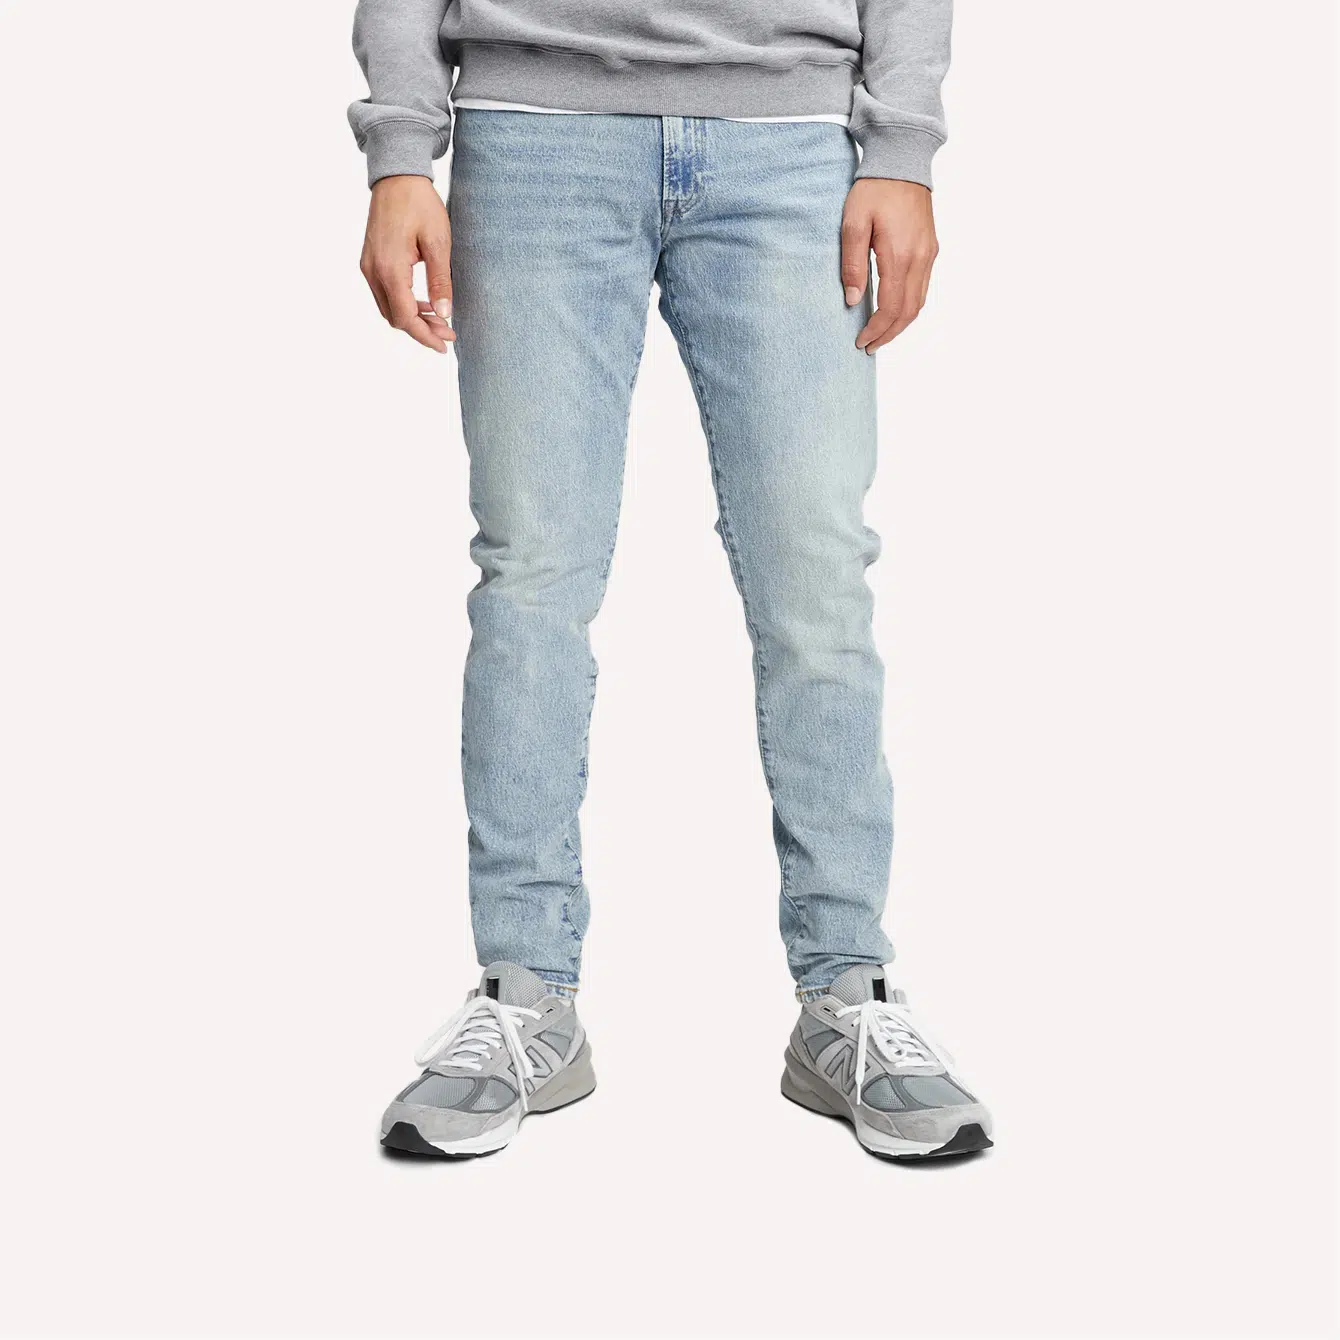 Gap Flex Slim Taper Jeans with Washwell